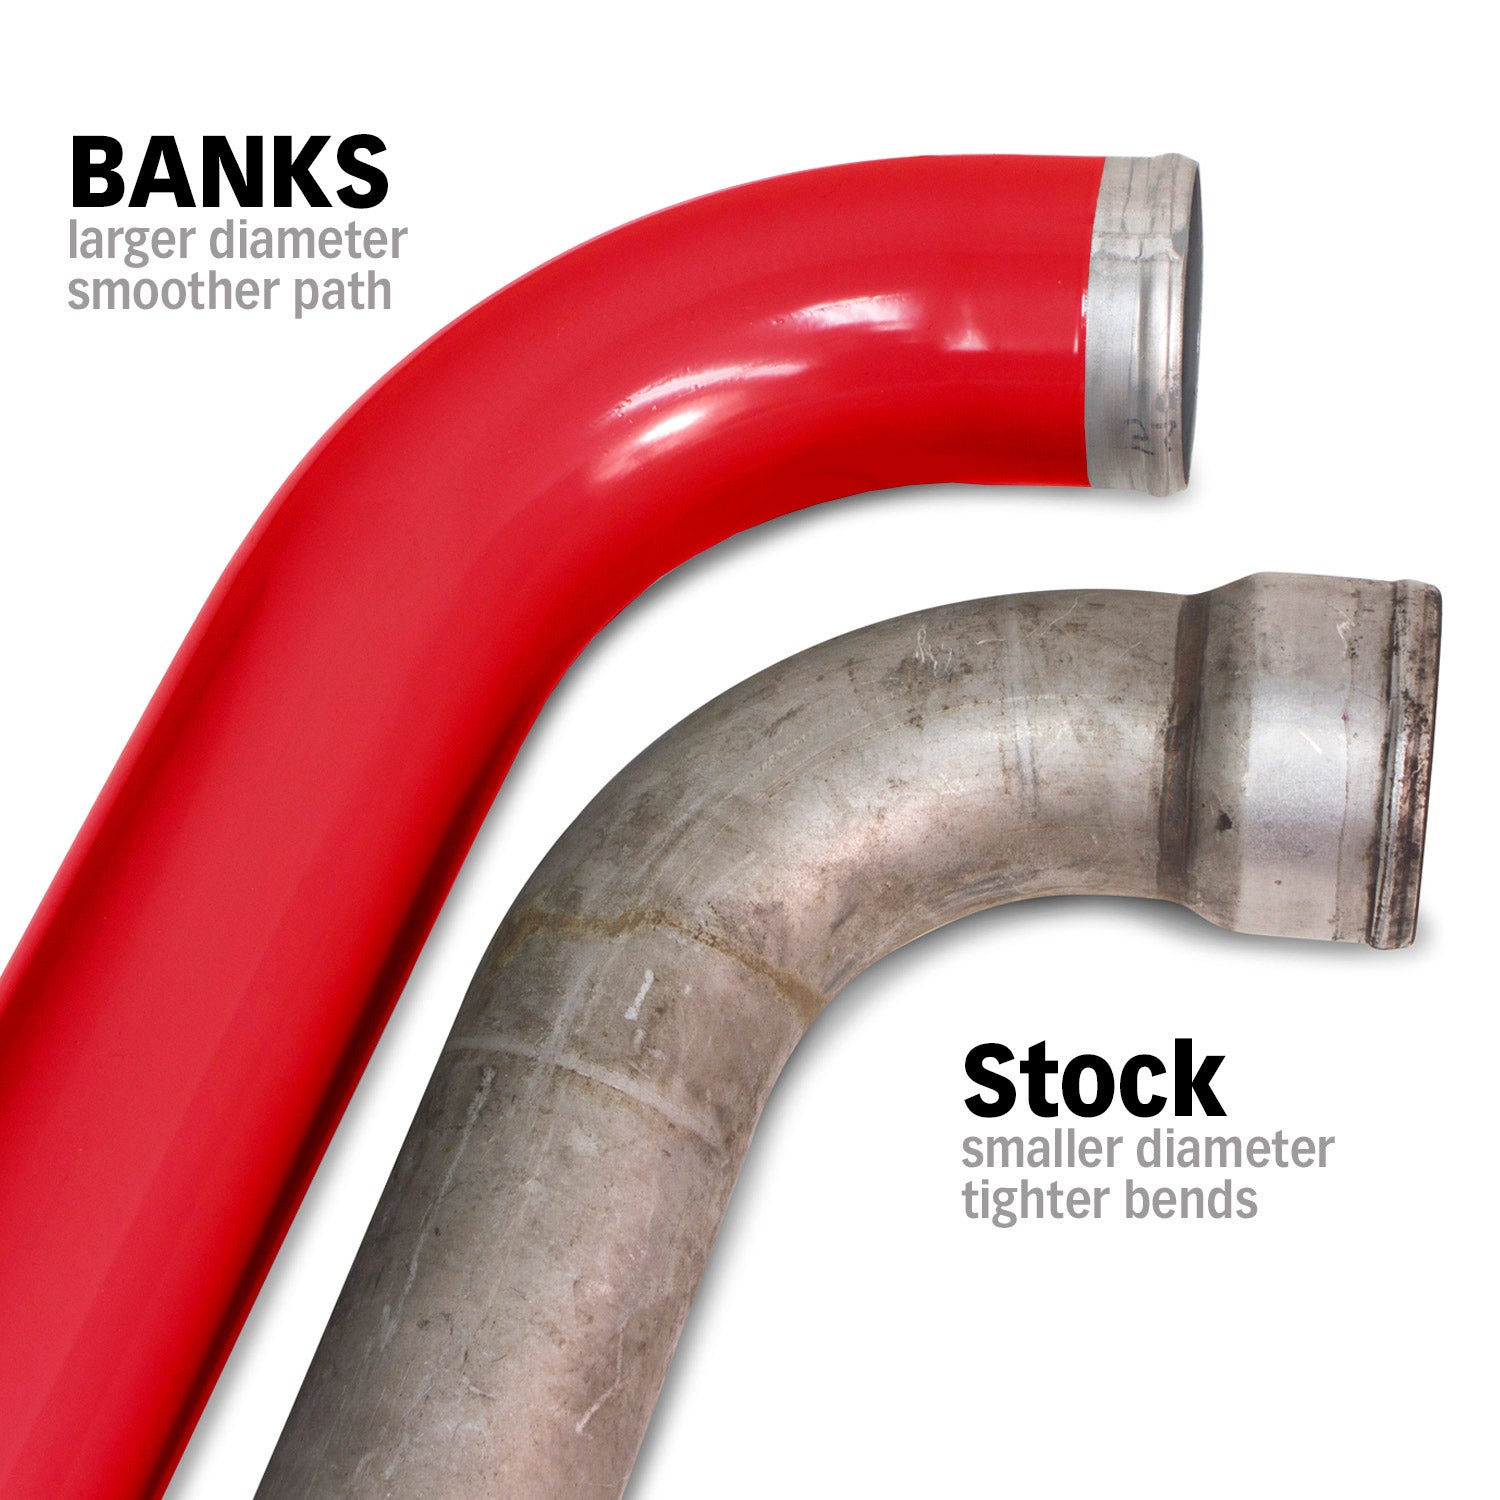 Banks boost tubes